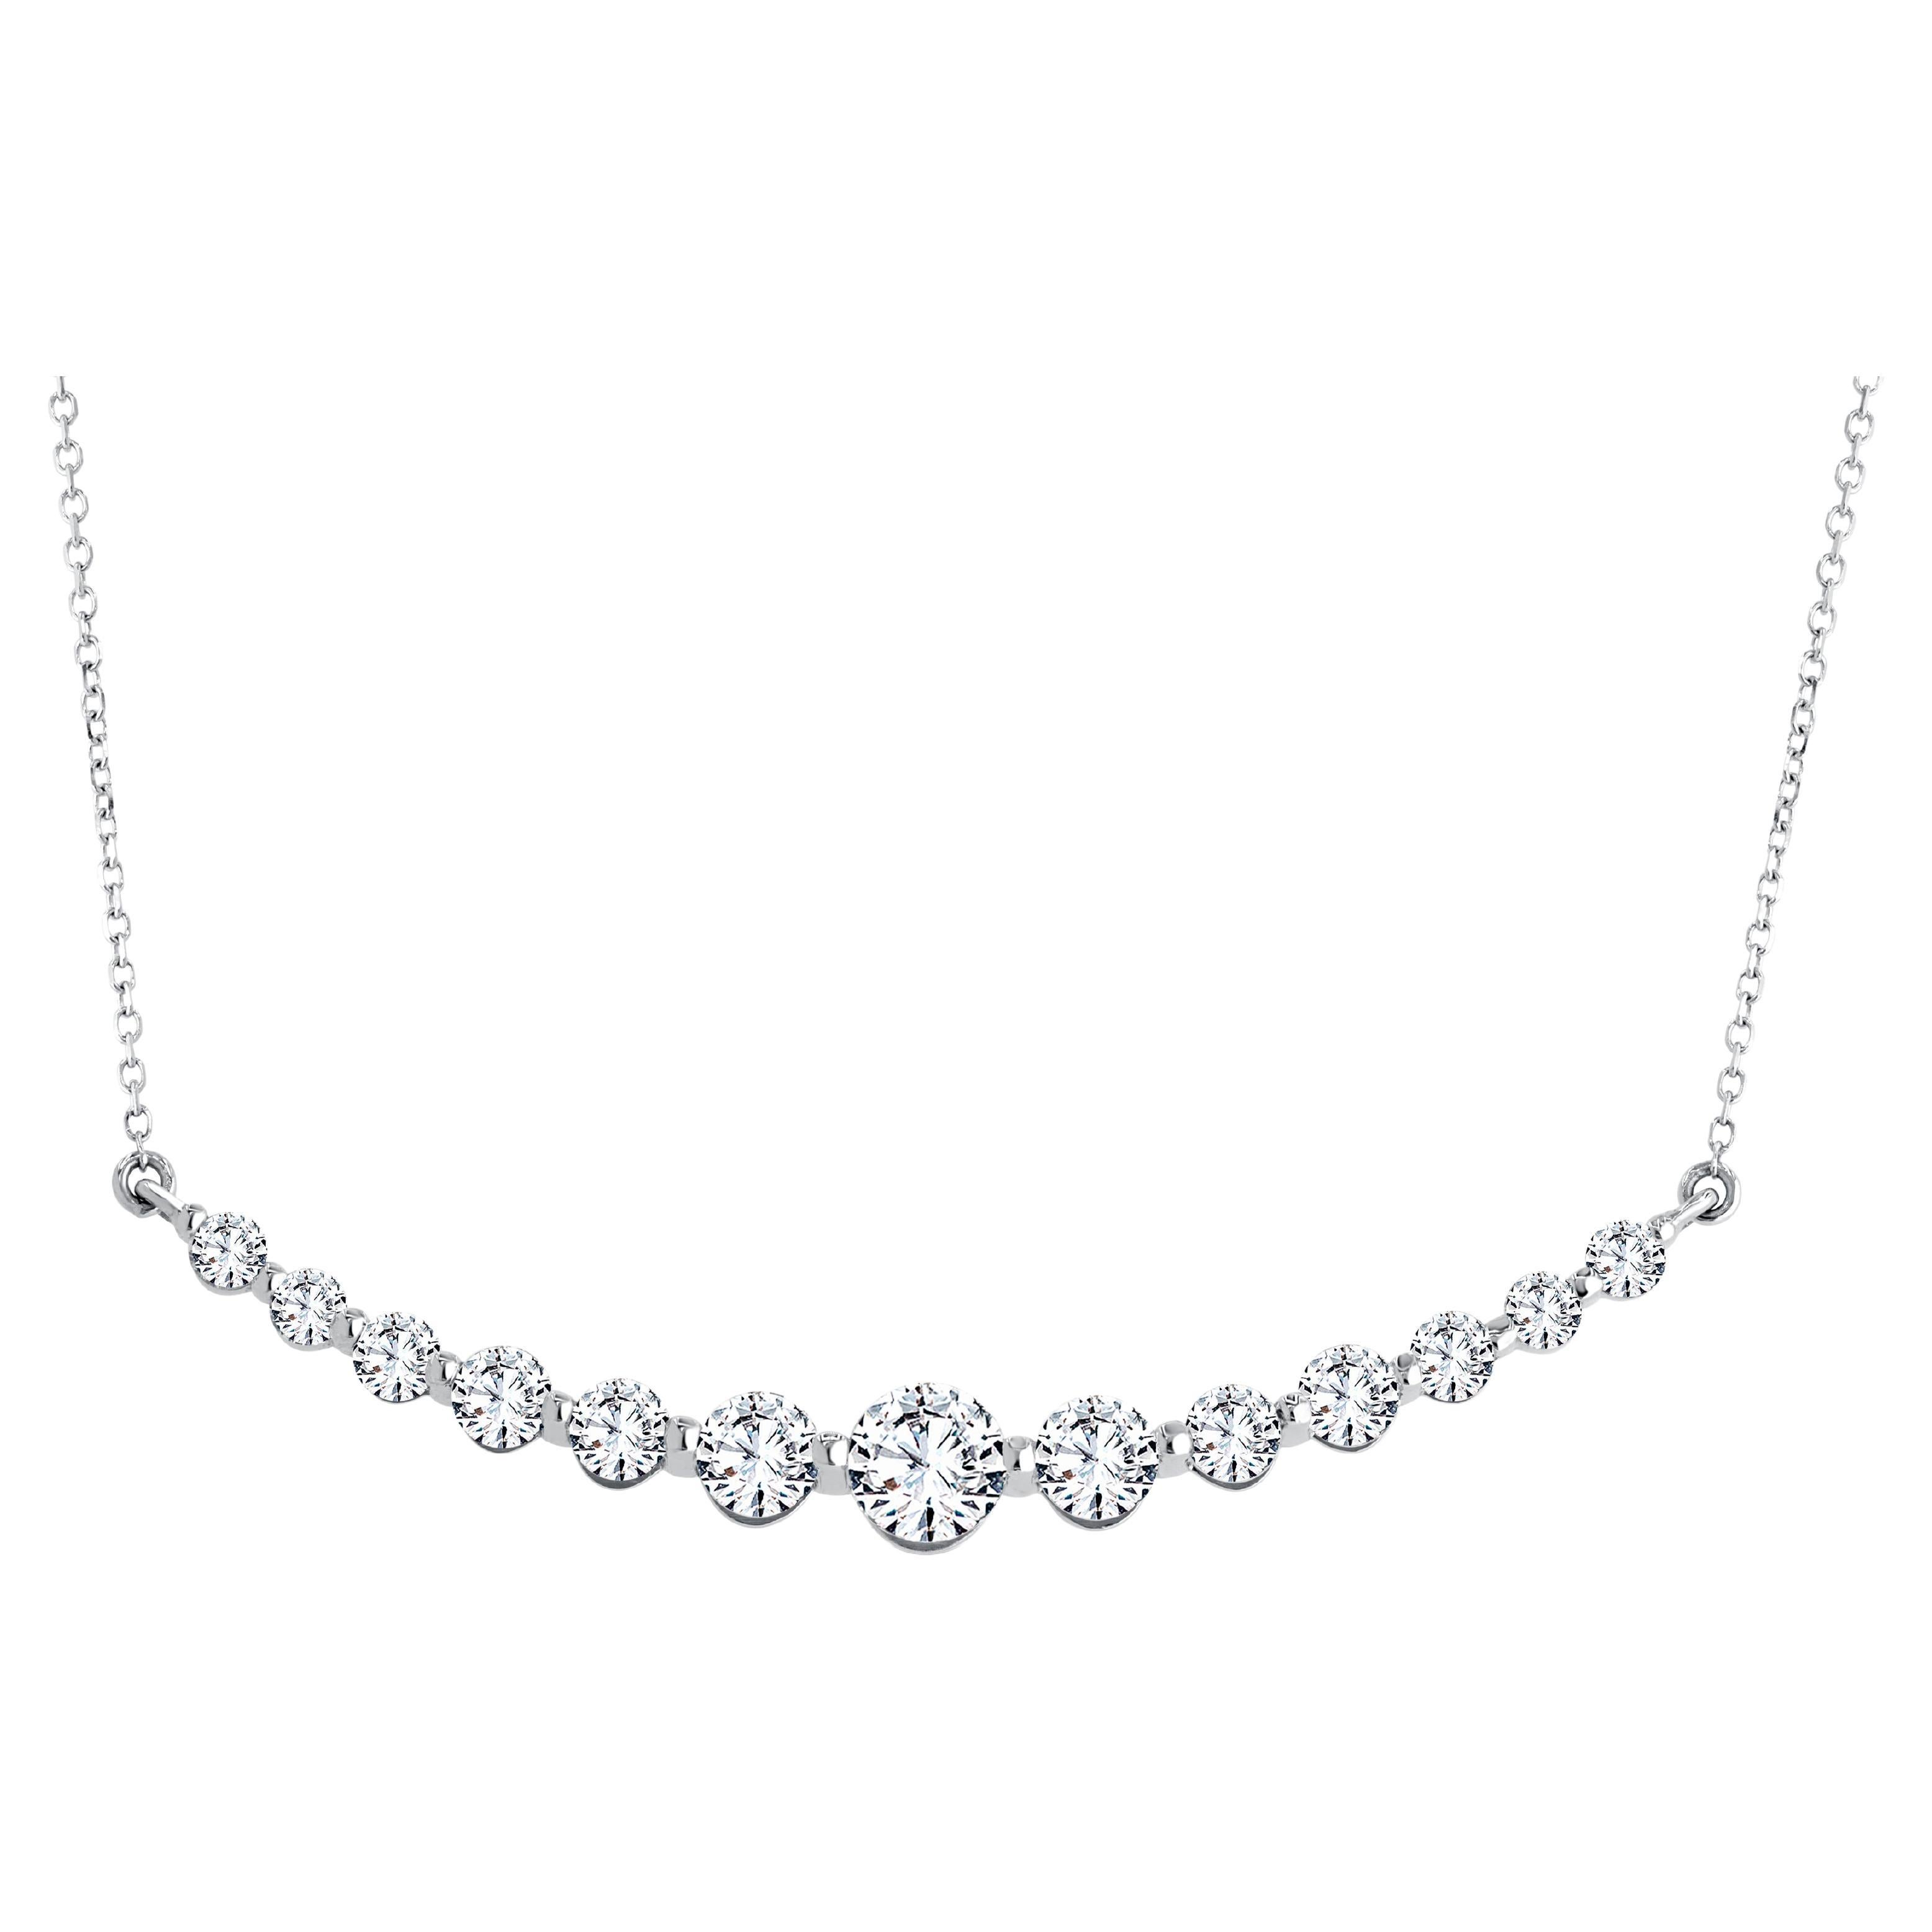 1.71 Carat Graduated Round Diamond Bar Necklace in 14k White Gold